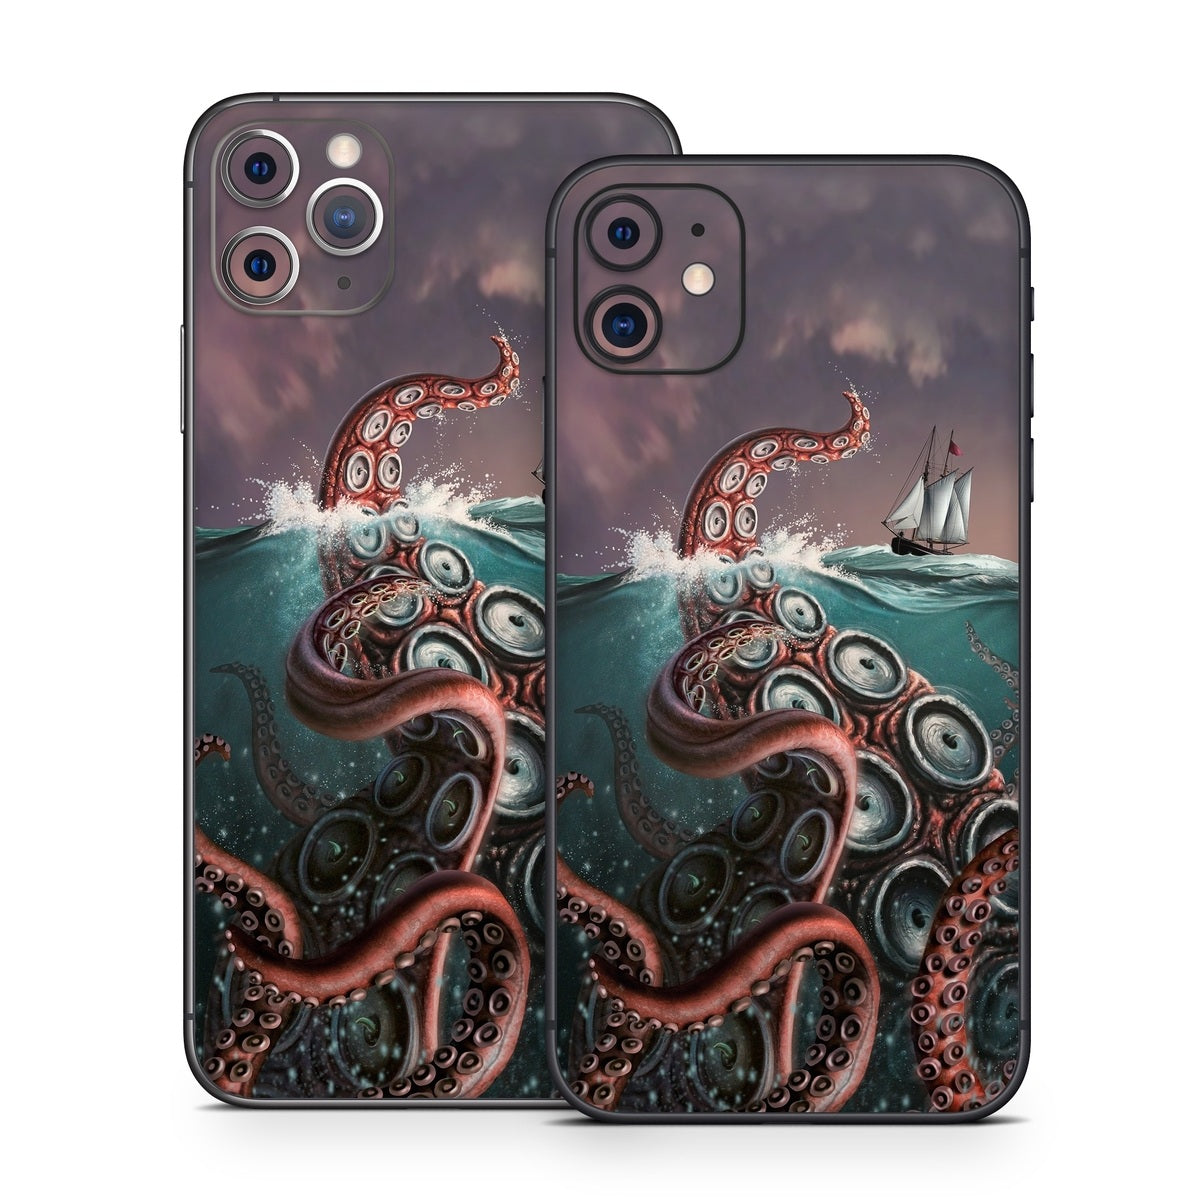 Kraken - Apple iPhone 11 Skin